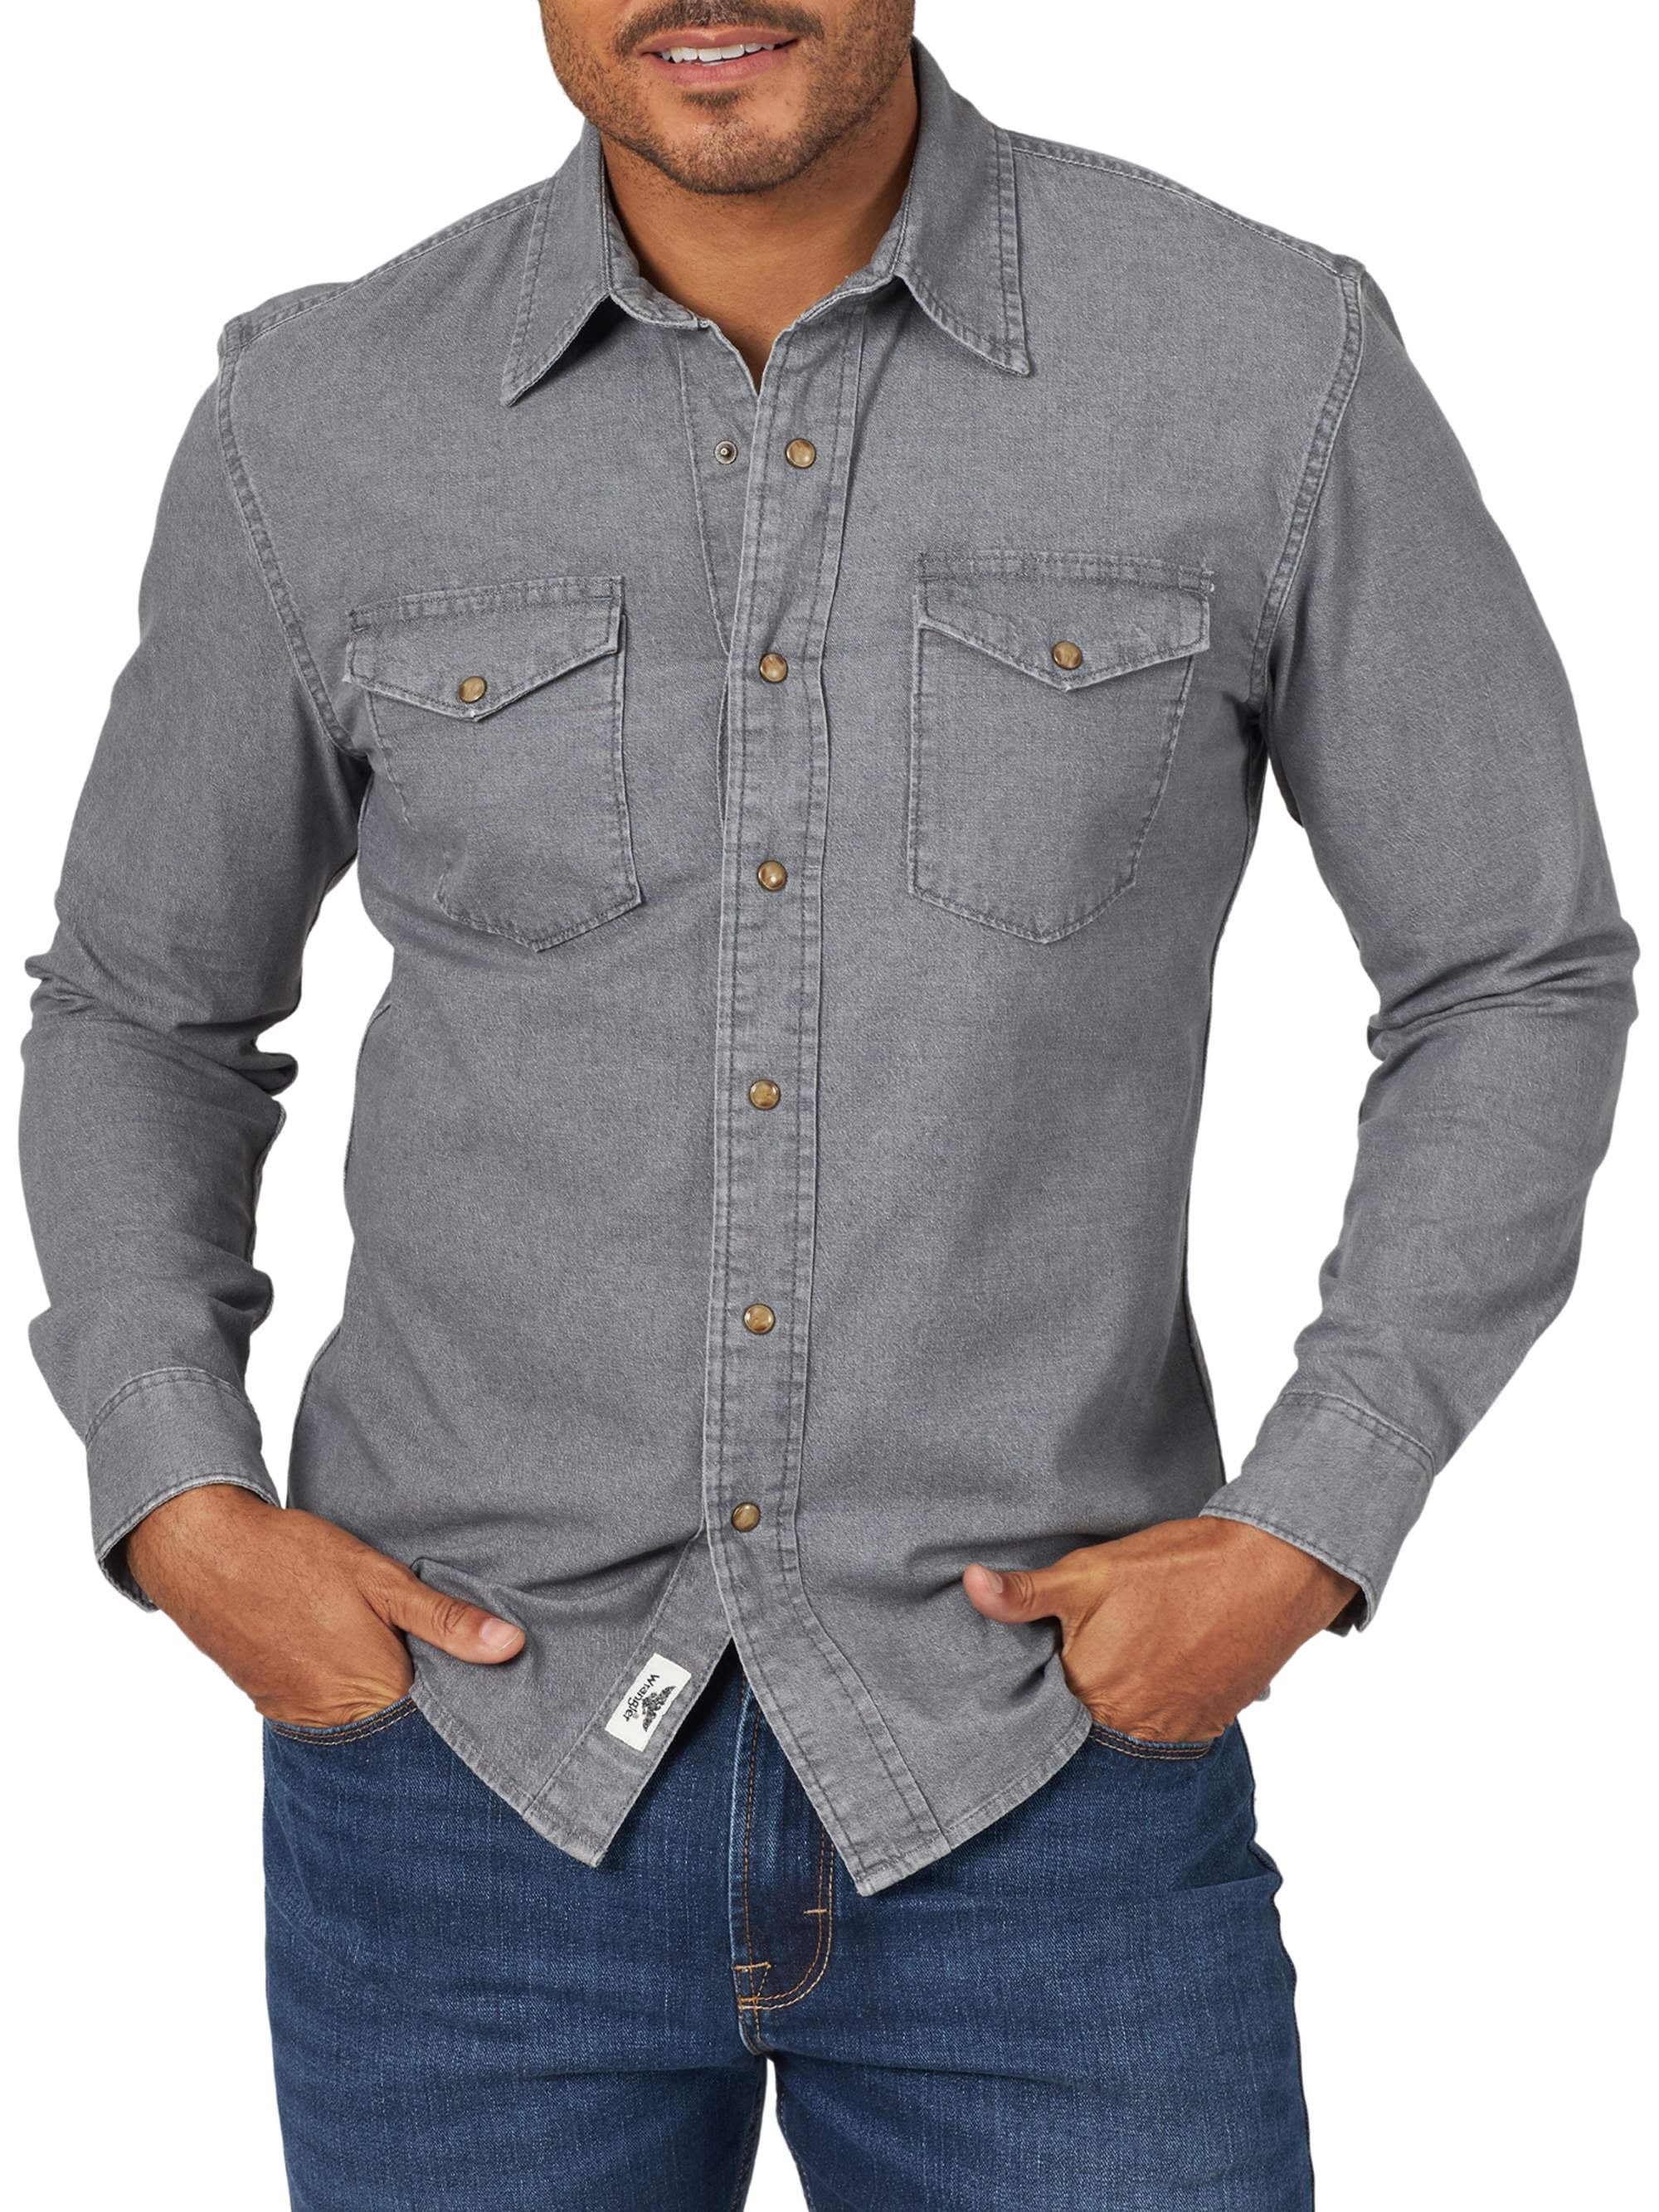 Wrangler Men's Premium Slim Fit Denim Shirt 